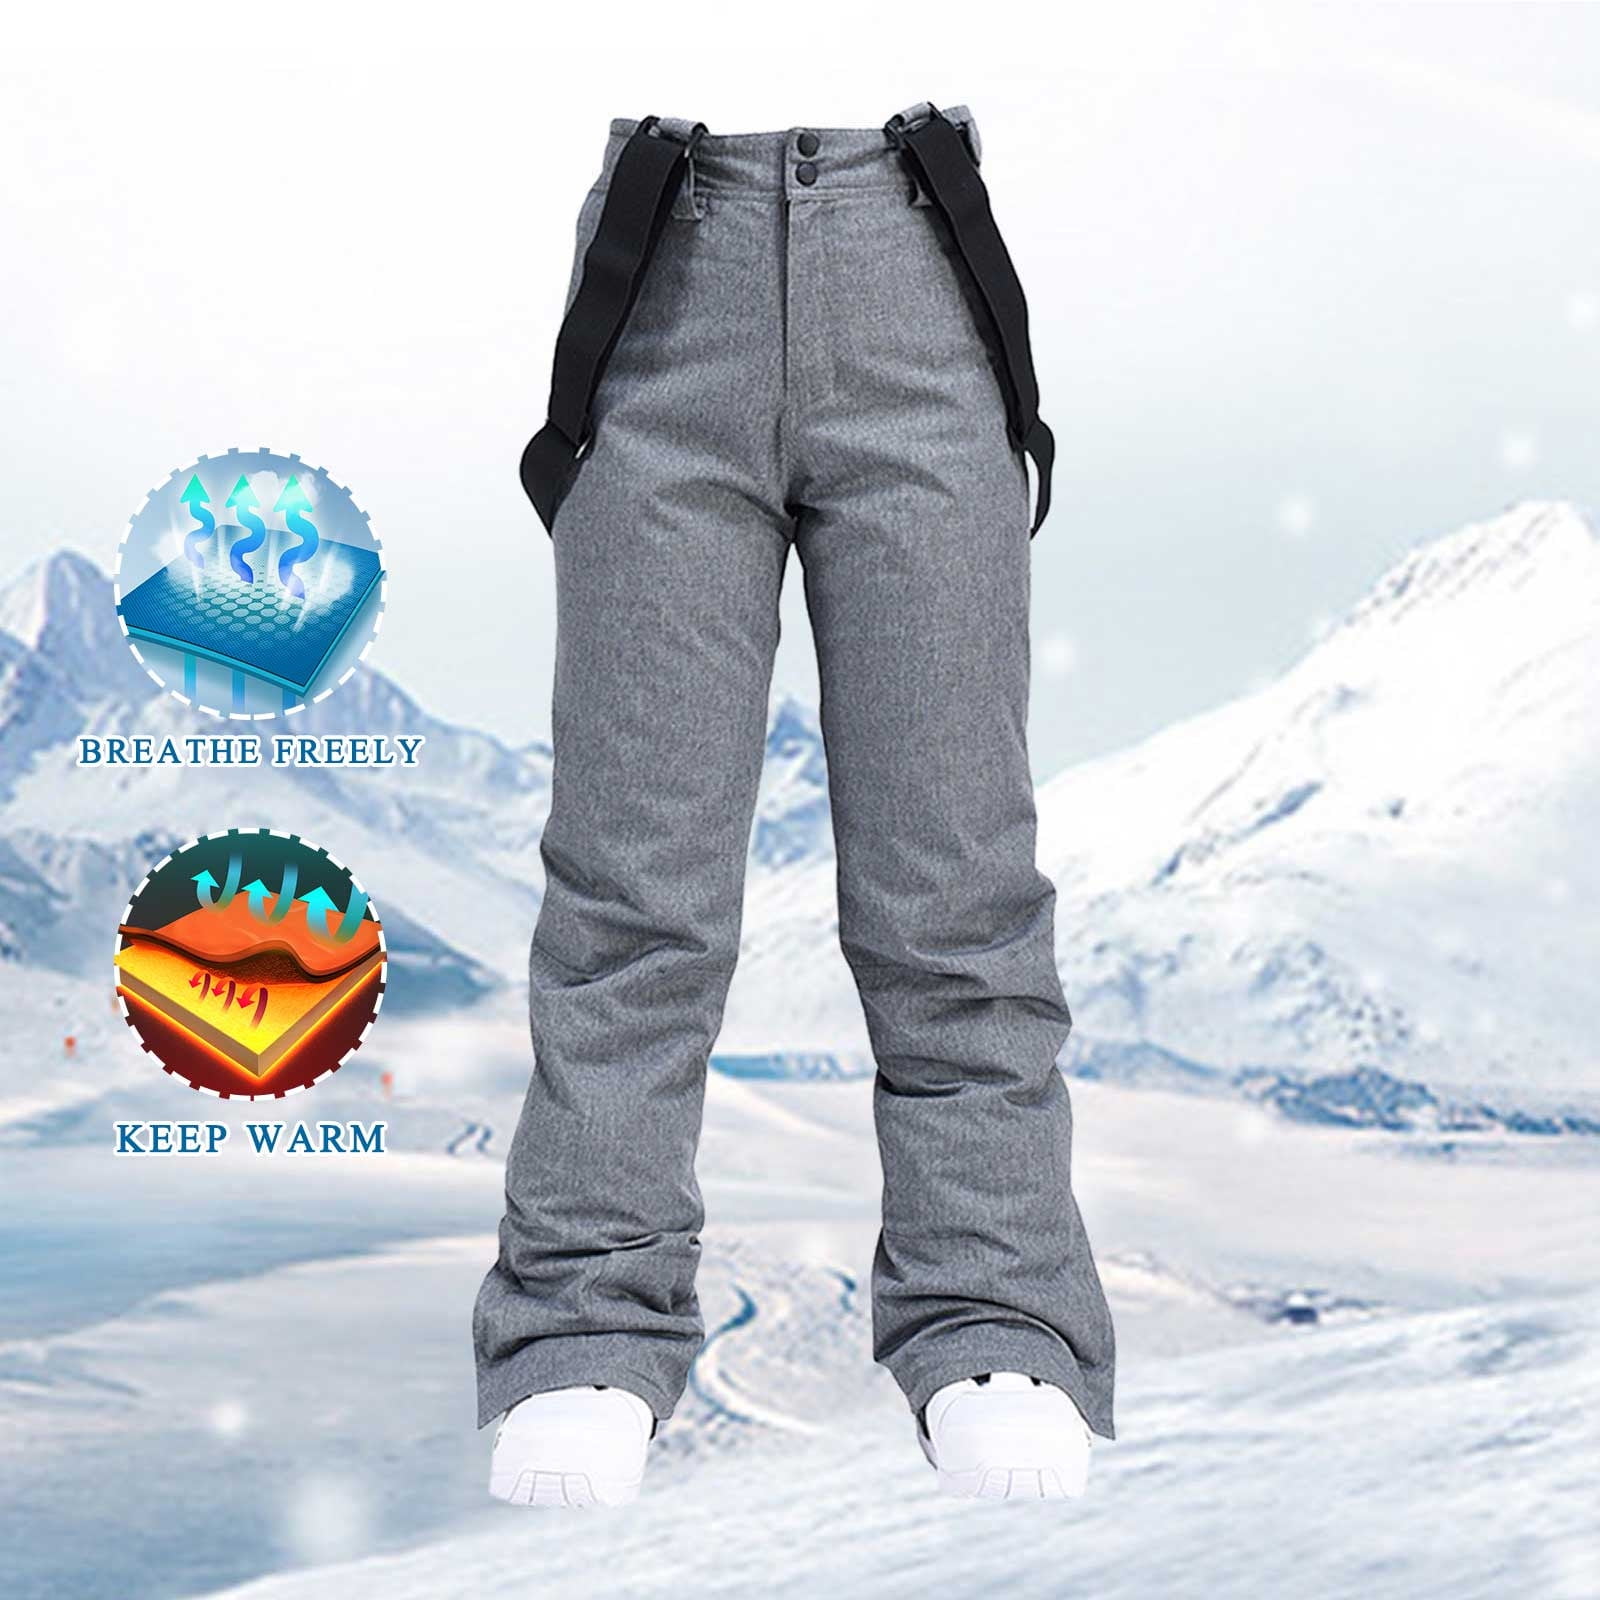 Tarmeek Womens Snow Bibs Ski Pants Winter Warm Insulated Waterproof Ski Bib  Overalls Snowboarding Pants Outdoor Snow Pants with Pockets